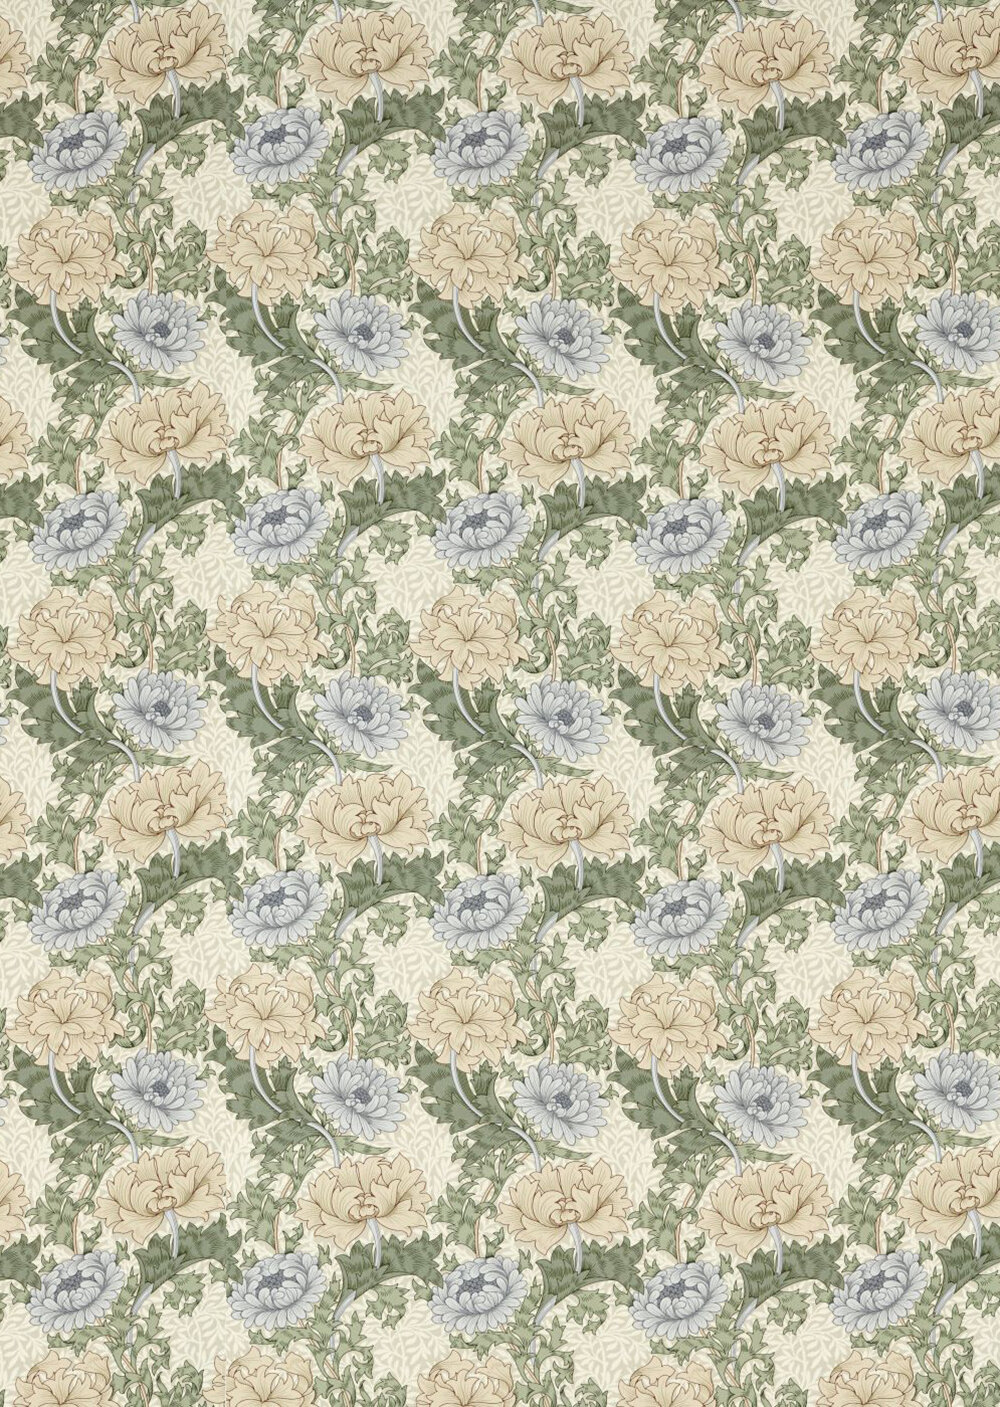 Chrysanthemum Fabric - Mineral / Cream - by Morris